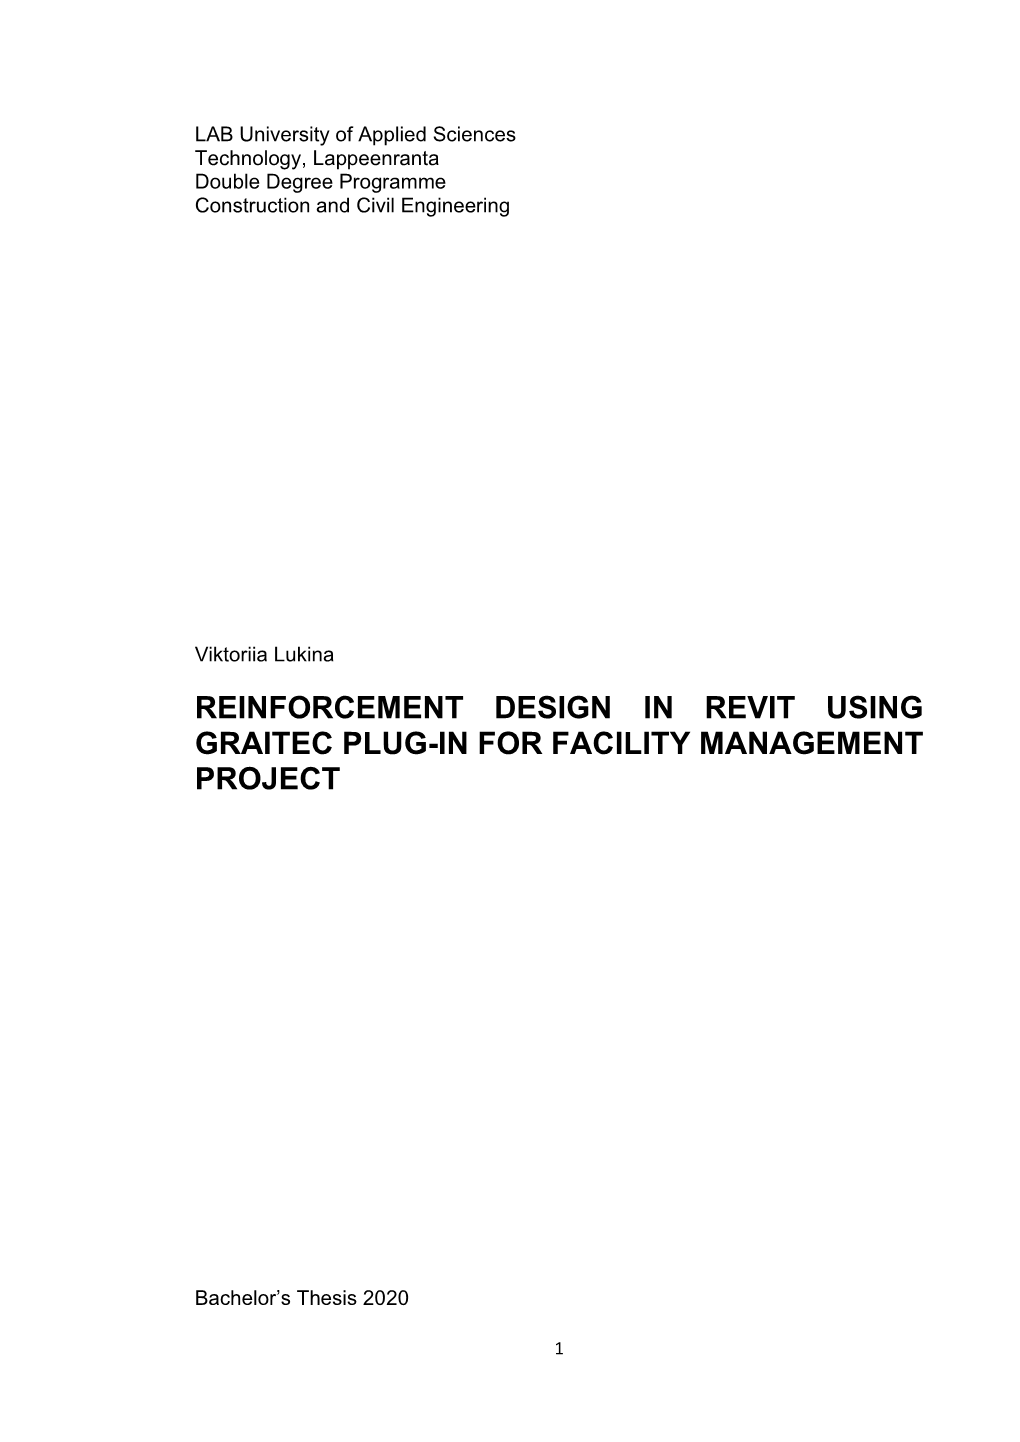 Reinforcement Design in Revit Using Graitec Plug-In for Facility Management Project